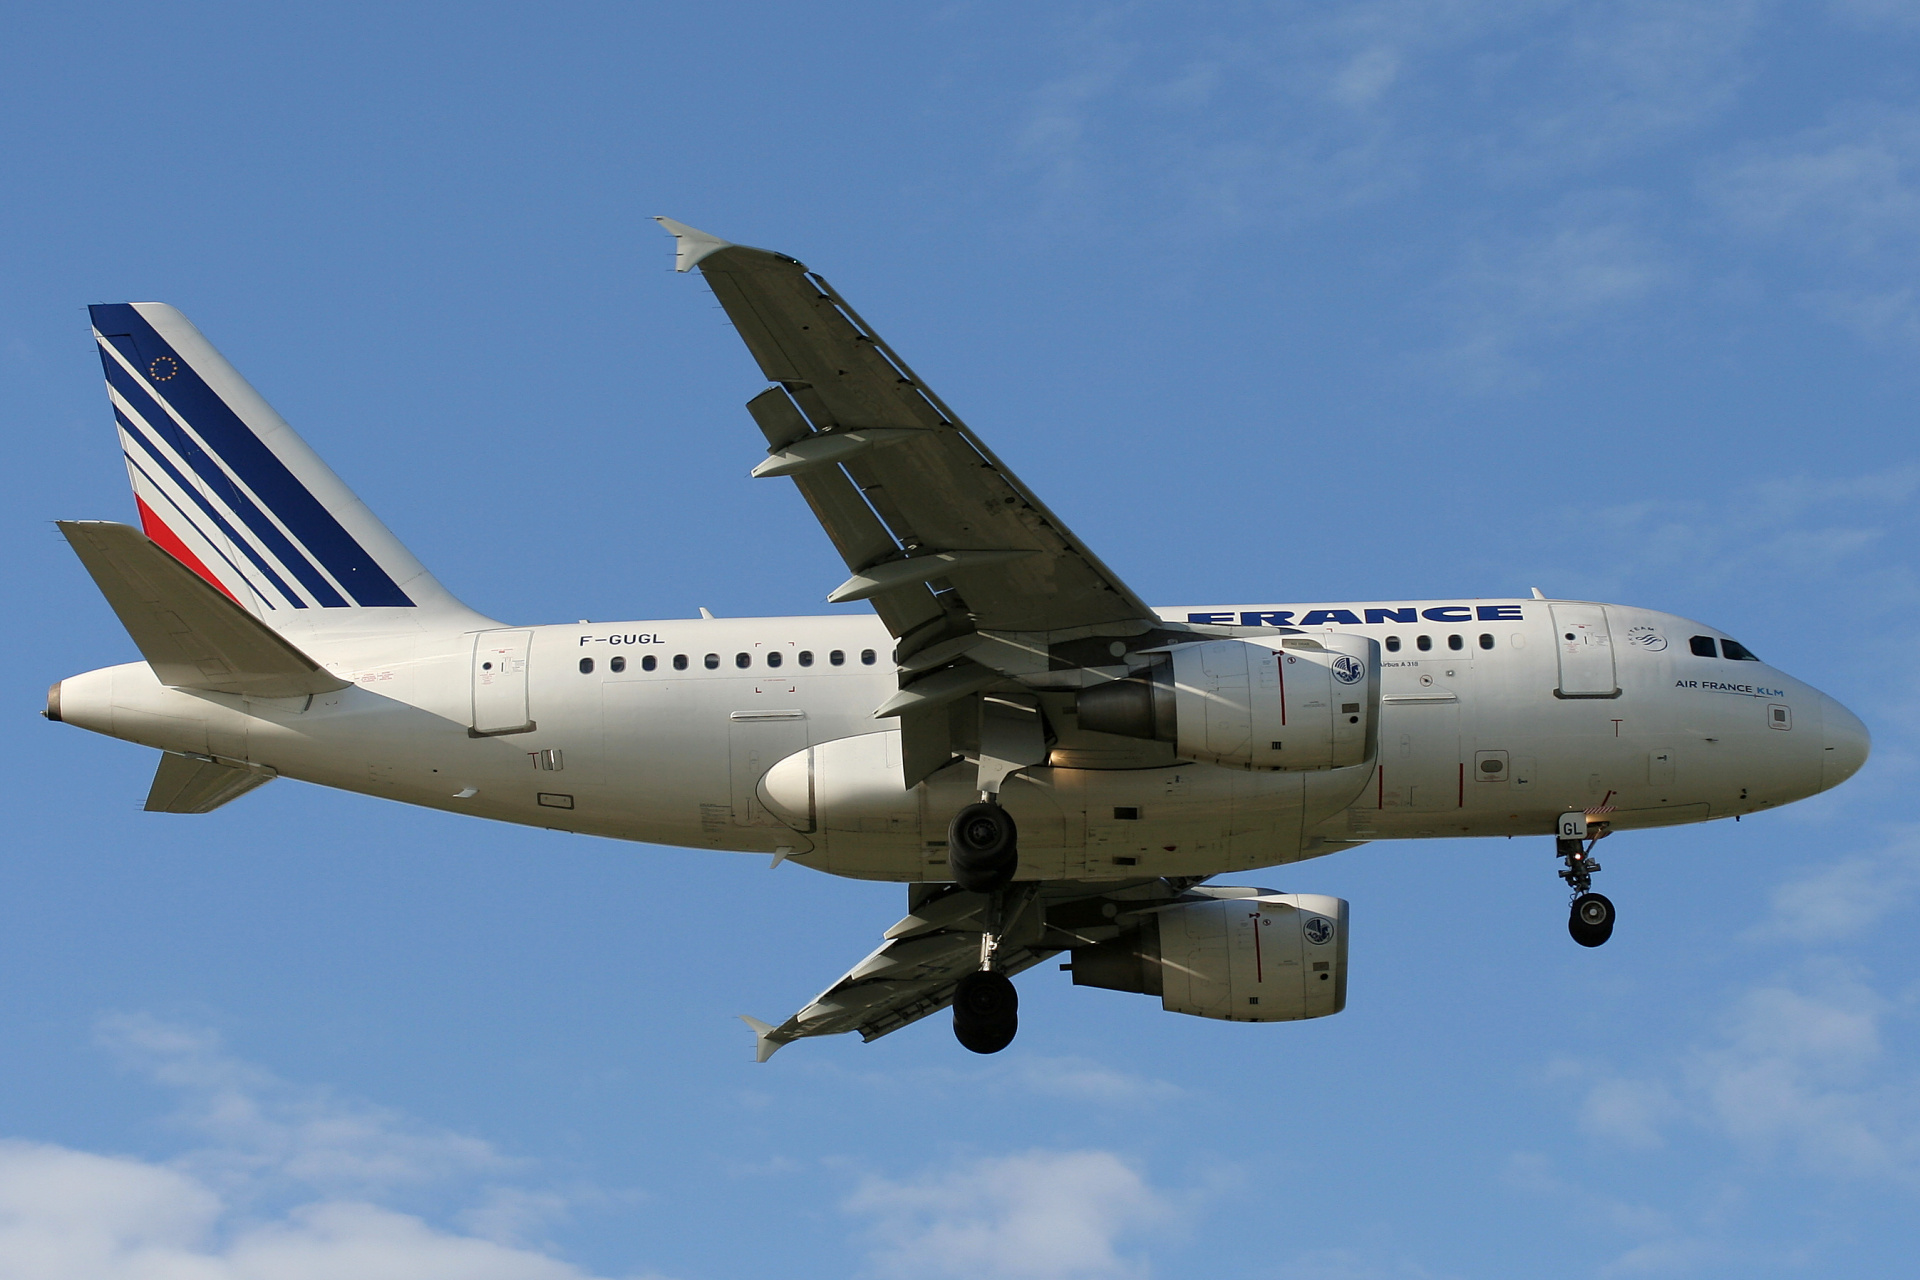 F-GUGL (Aircraft » EPWA Spotting » Airbus A318-100 » Air France)